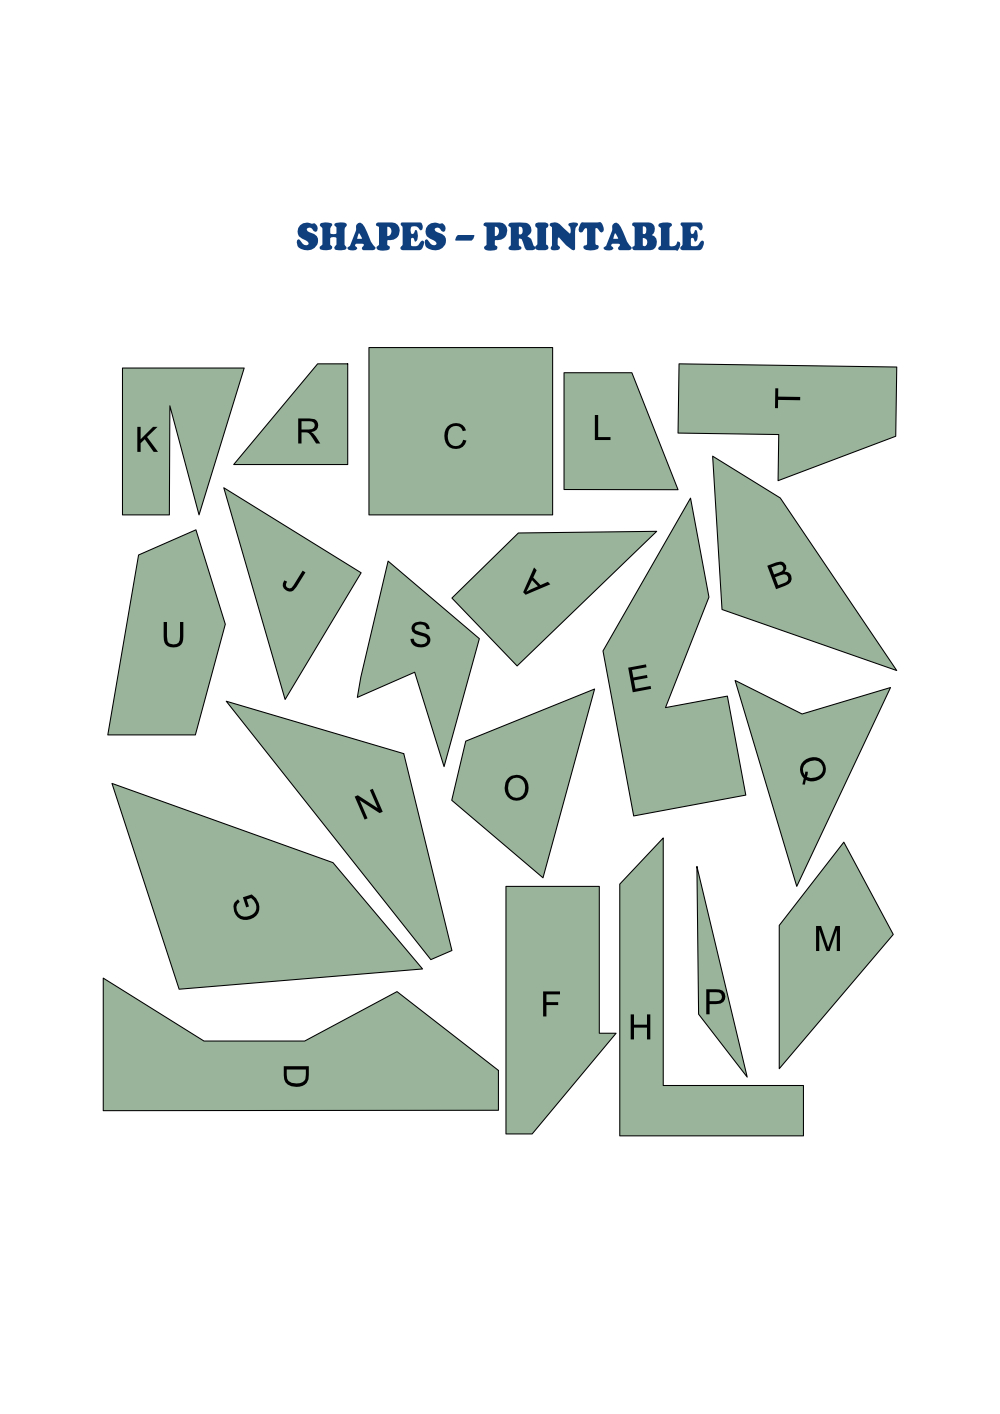 Shapes puzzle printable version